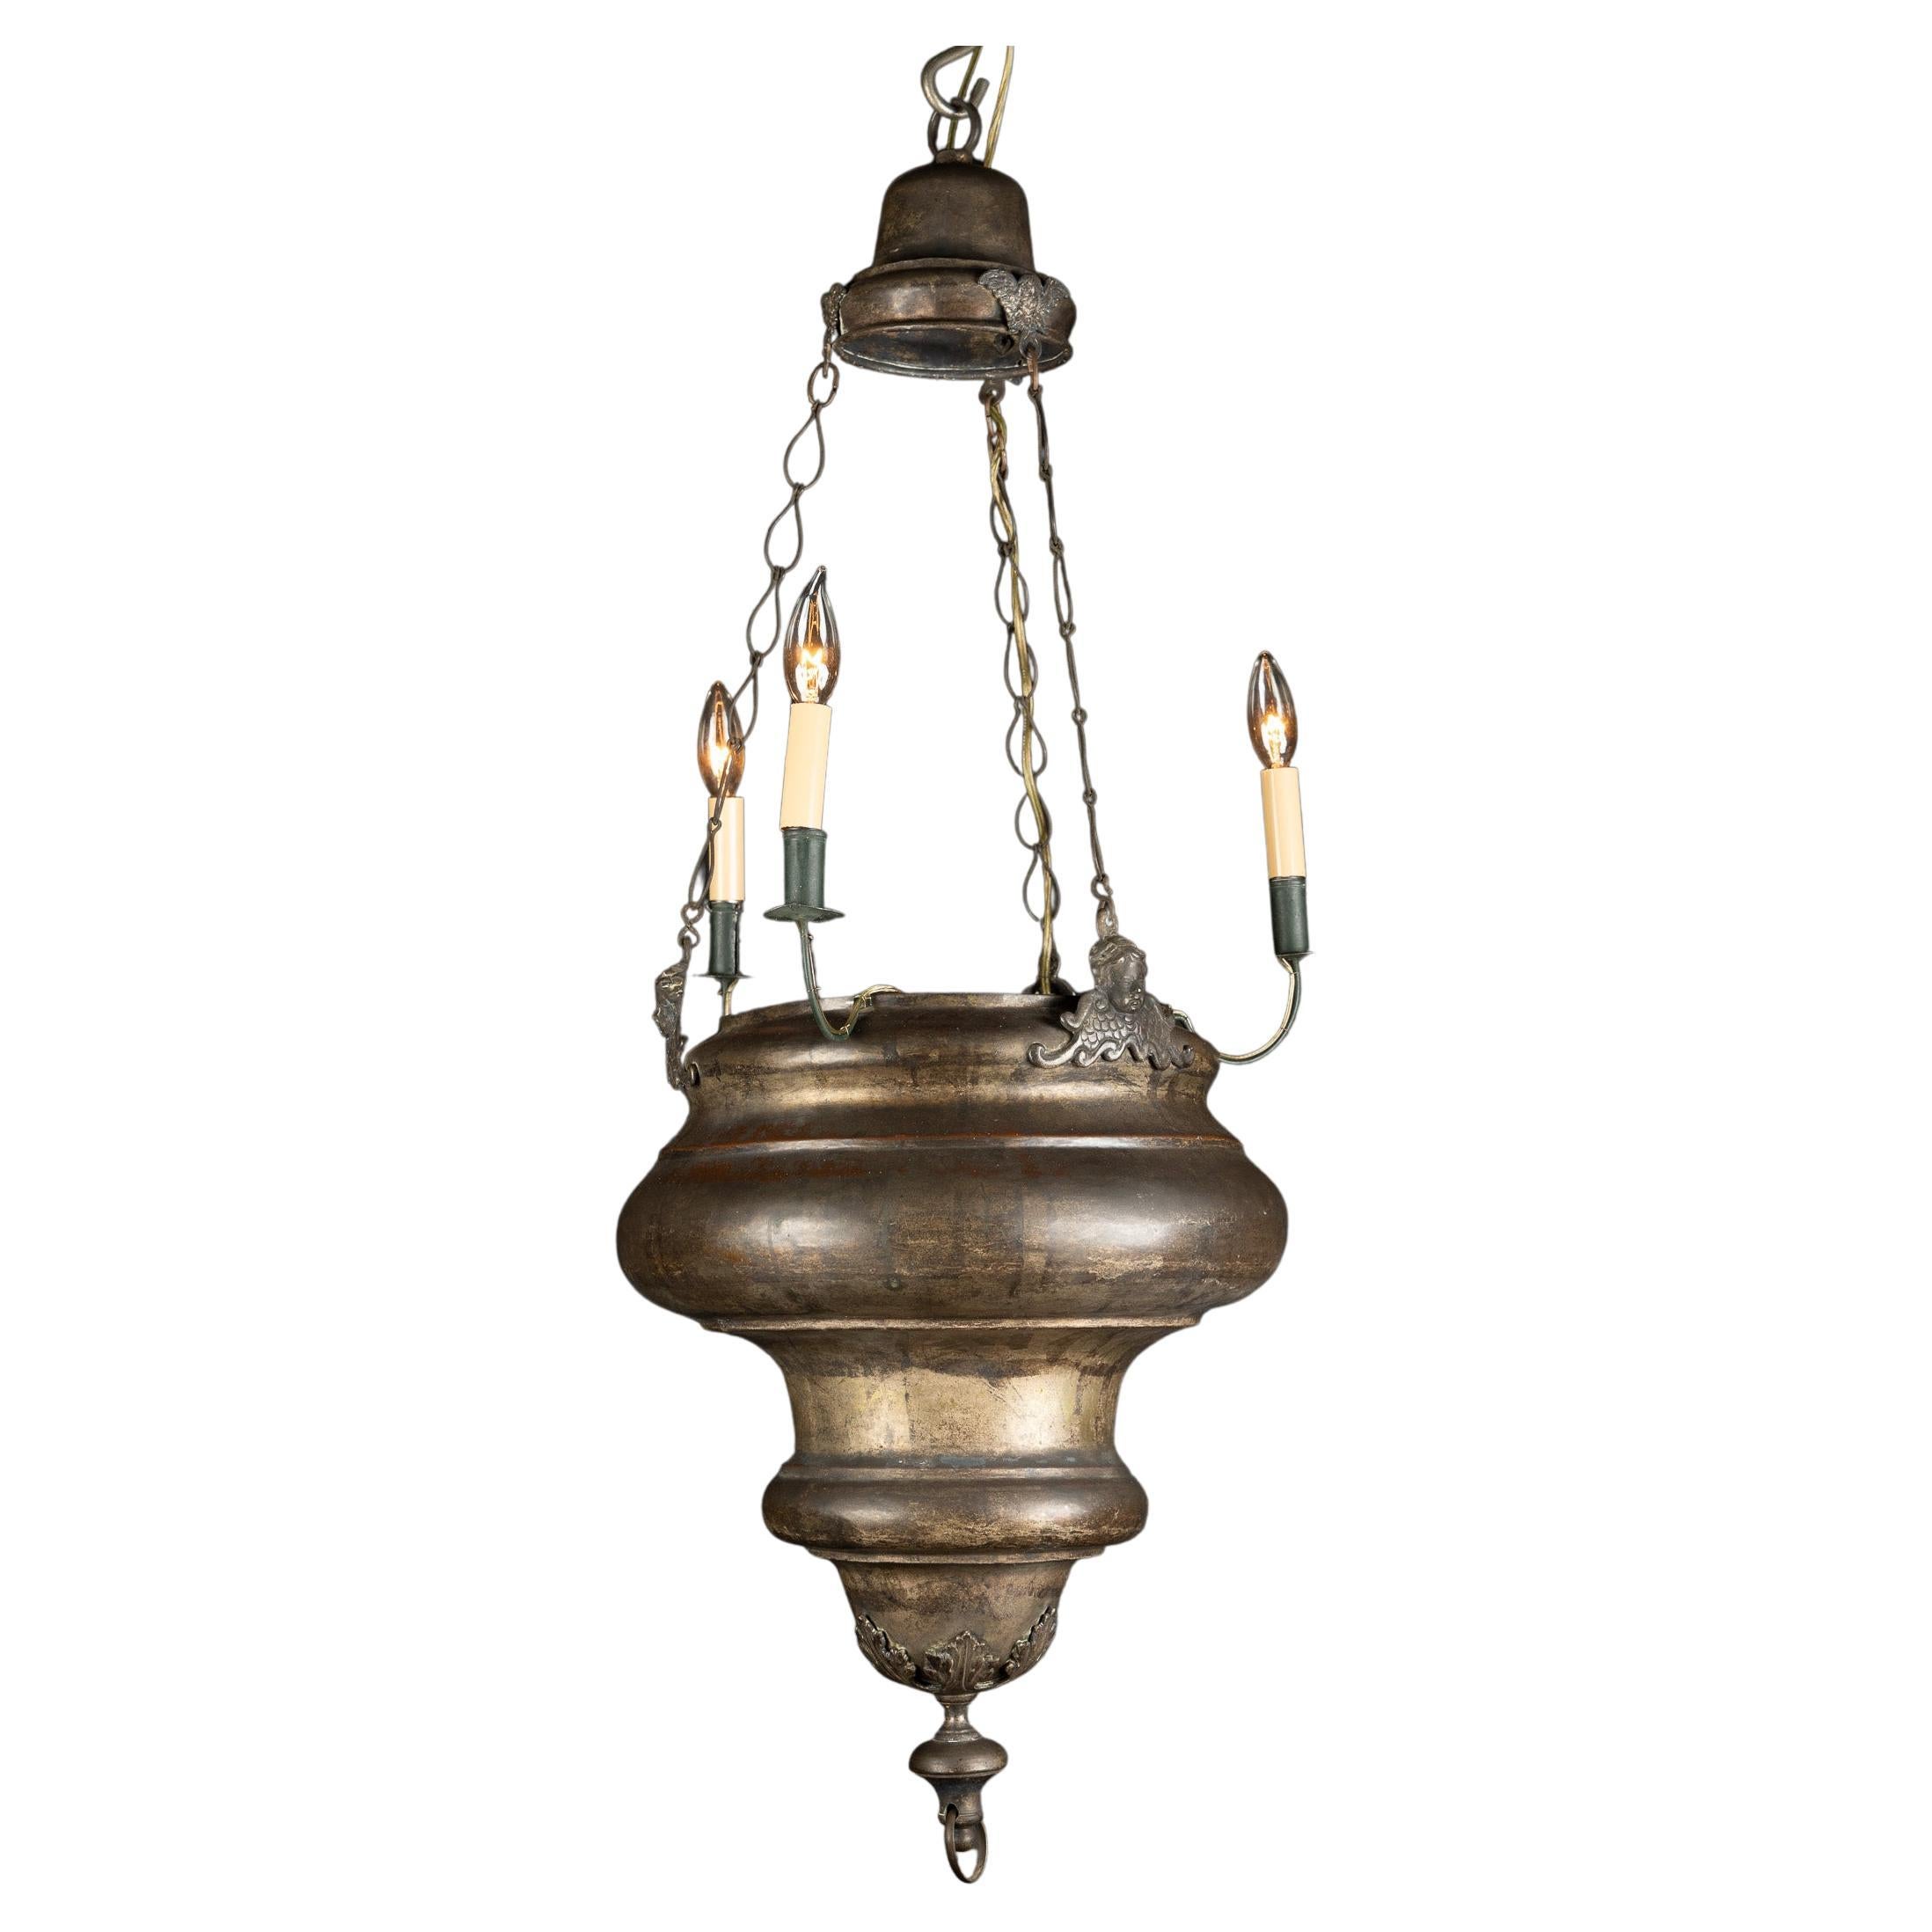 Grand 19th Century French Sanctuary Lantern with Moorish Designs For Sale